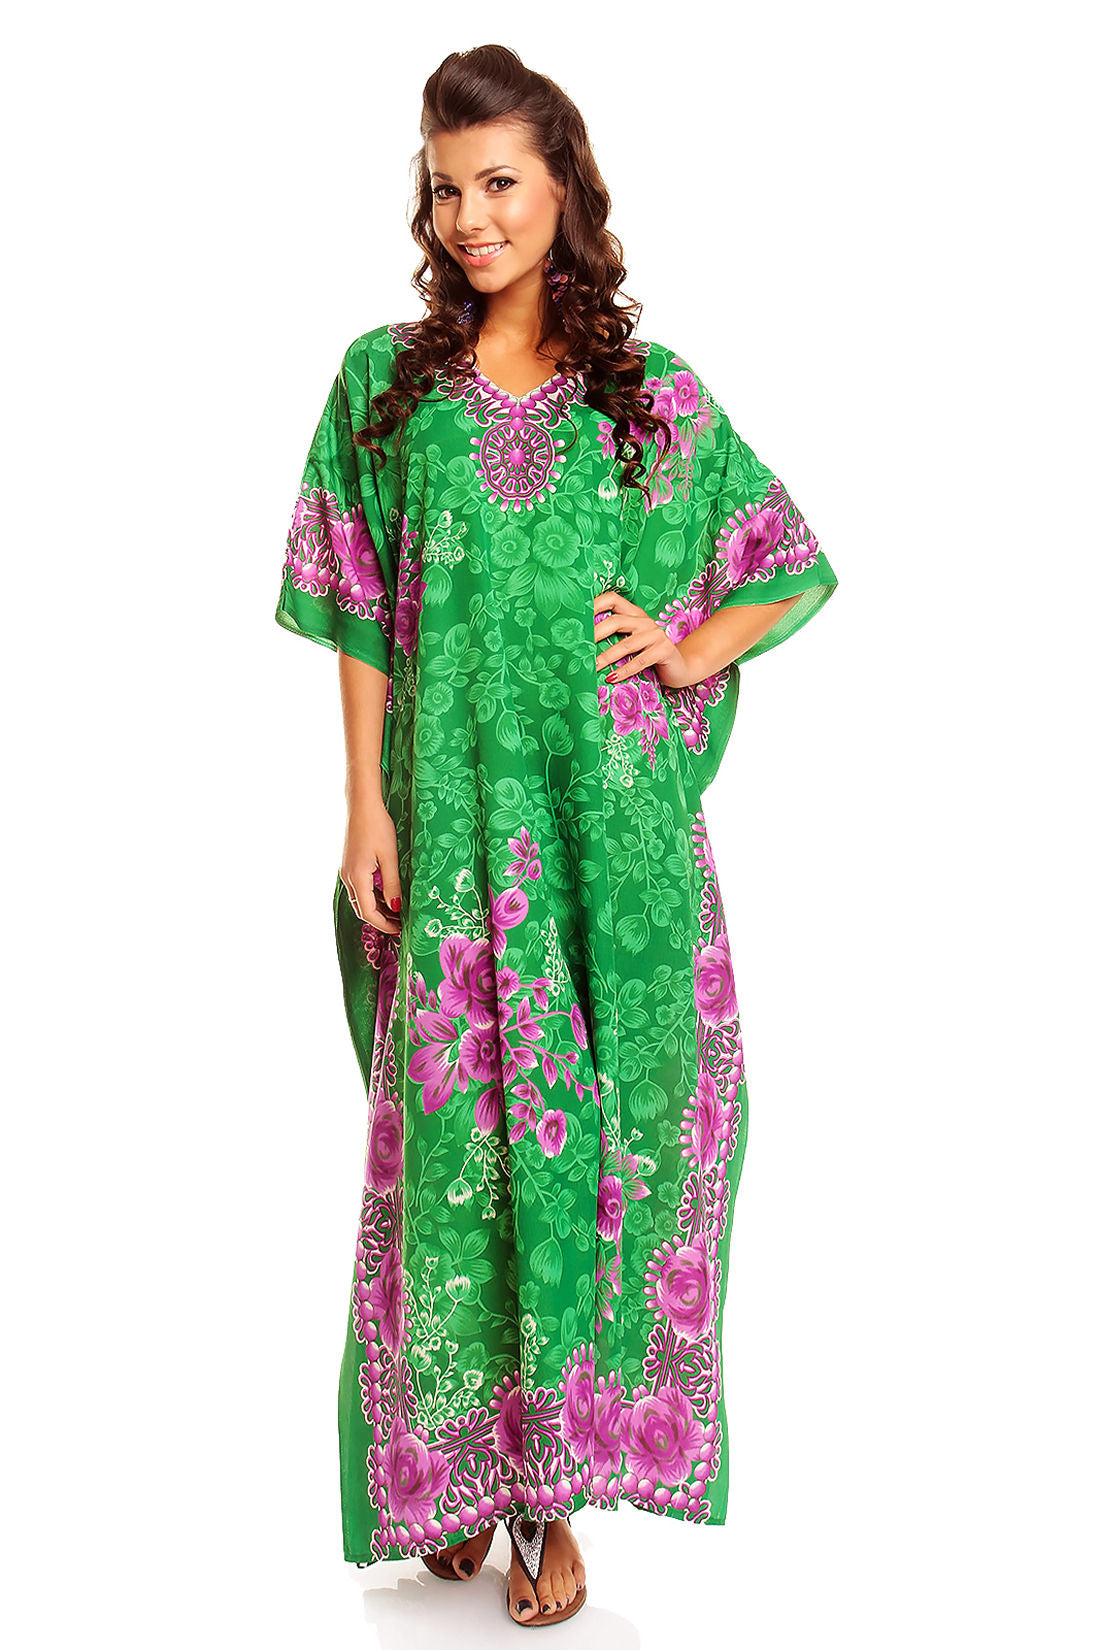 Ladies Full Length Maxi Kaftan Floral Dress in Green